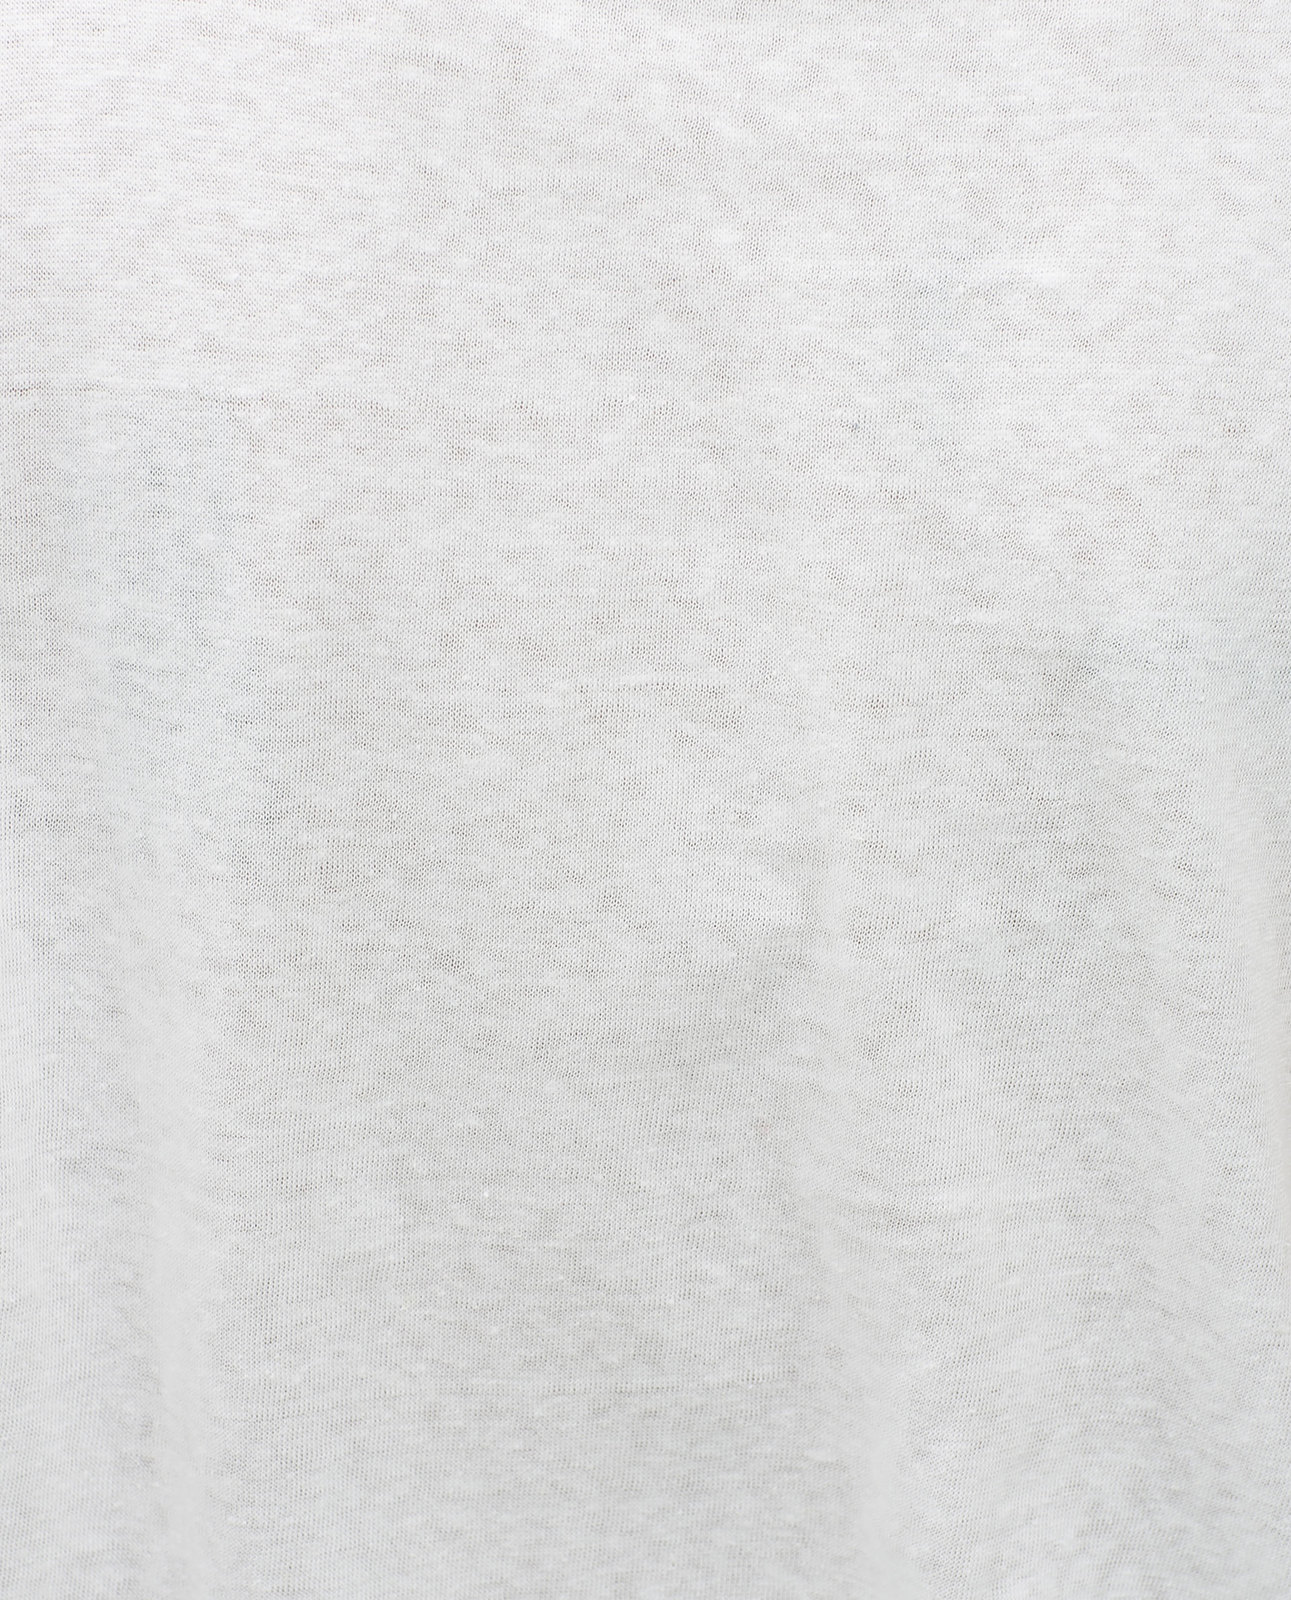 Zara csillagos fehér T-shirt 2015.02.23 #74915 fotója